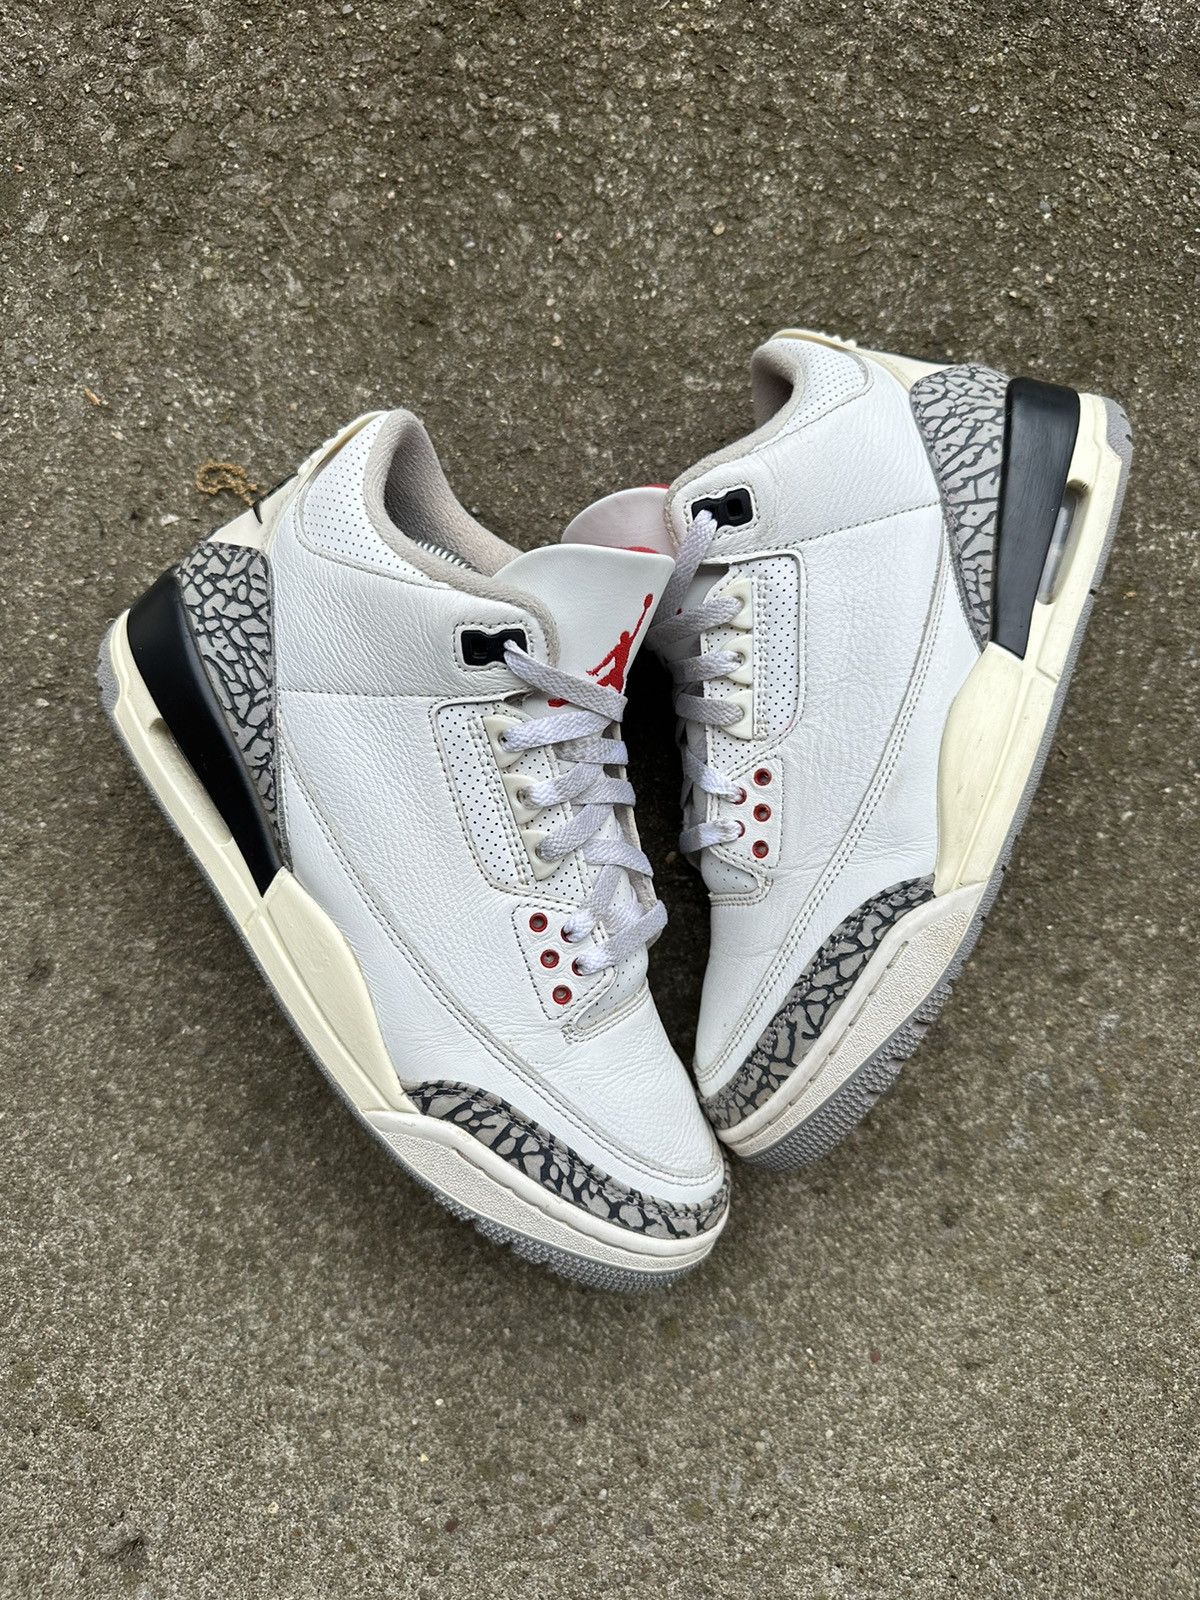 Pre-owned Jordan Nike Air Jordan 3 Retro Reimagined White Cement Size 9 Shoes